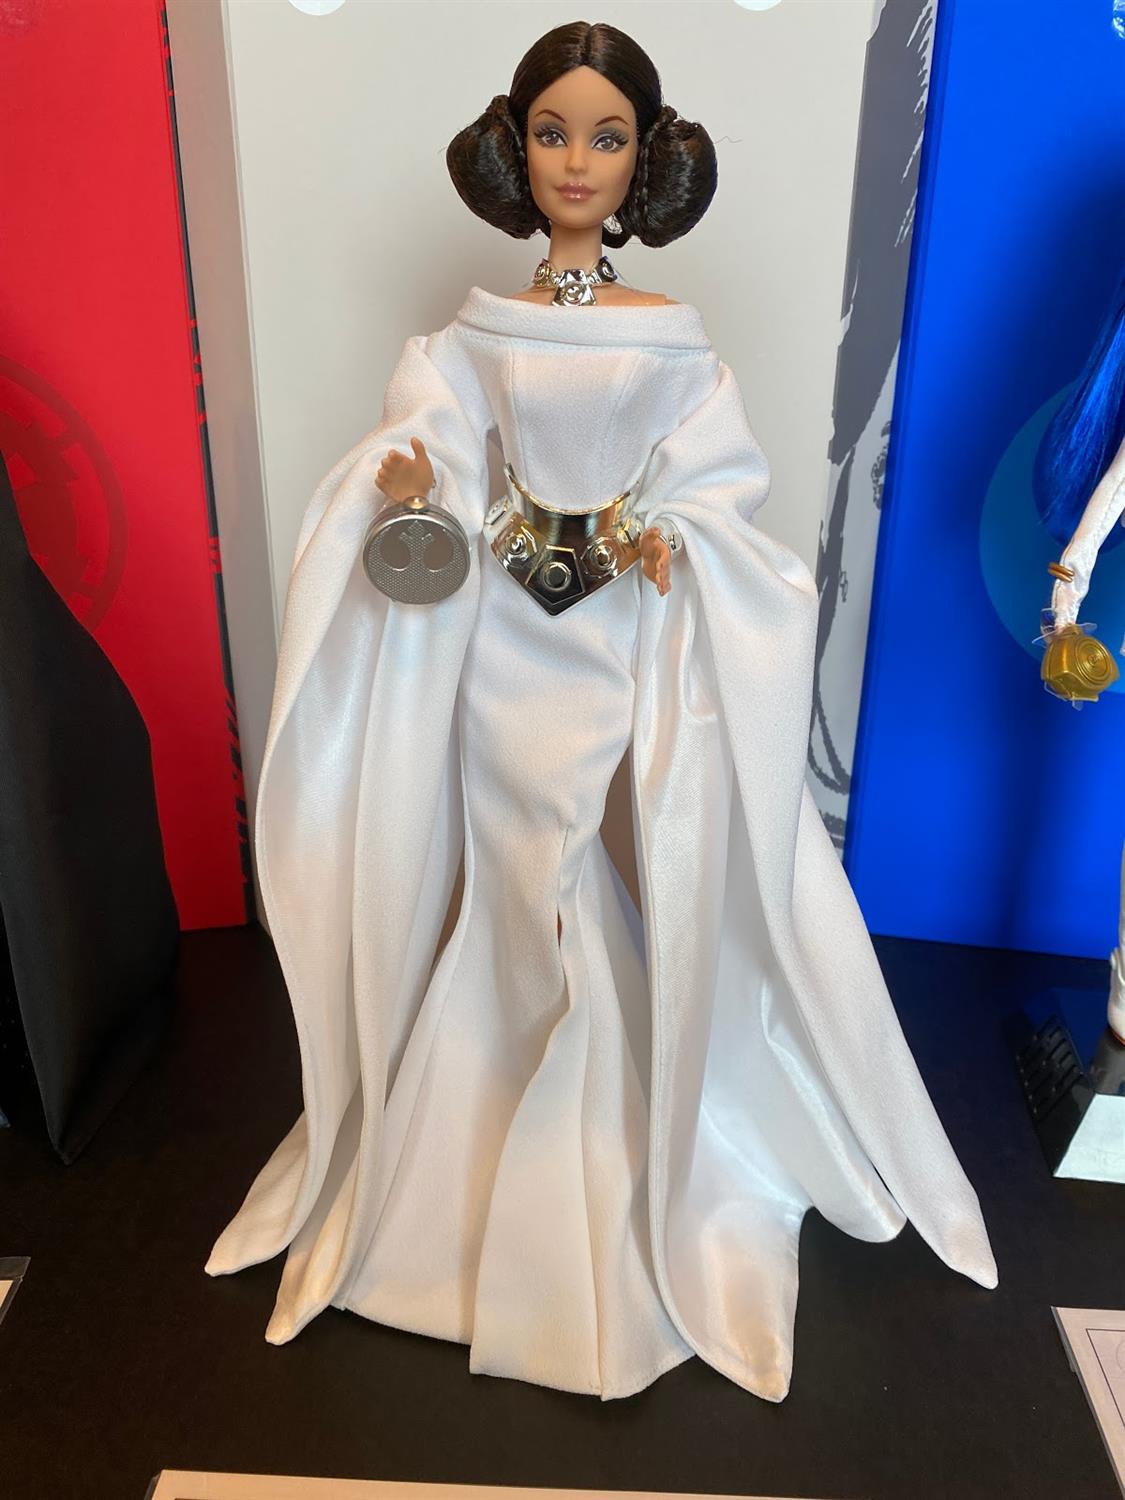 star wars princess leia barbie doll